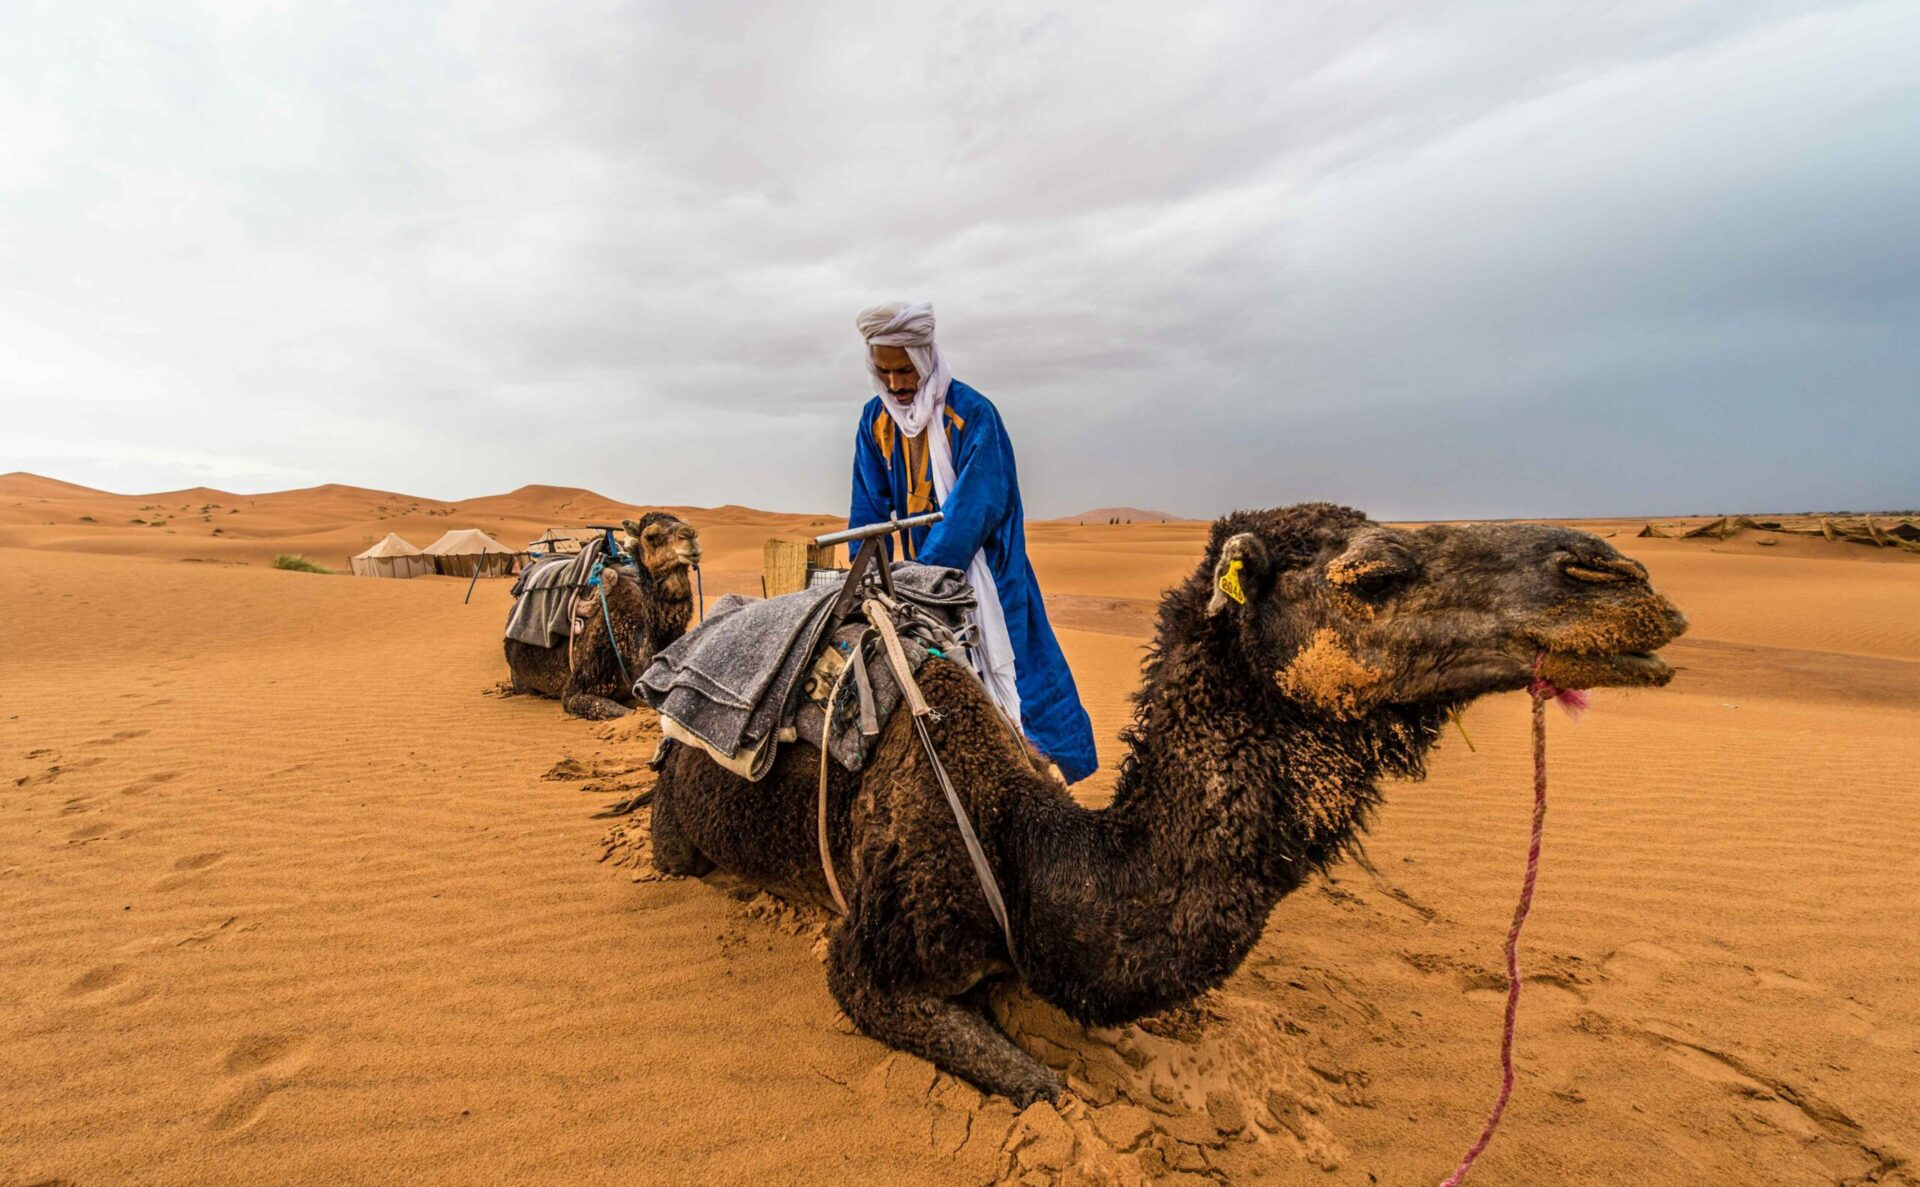 Local man tending to his camel in Sahara